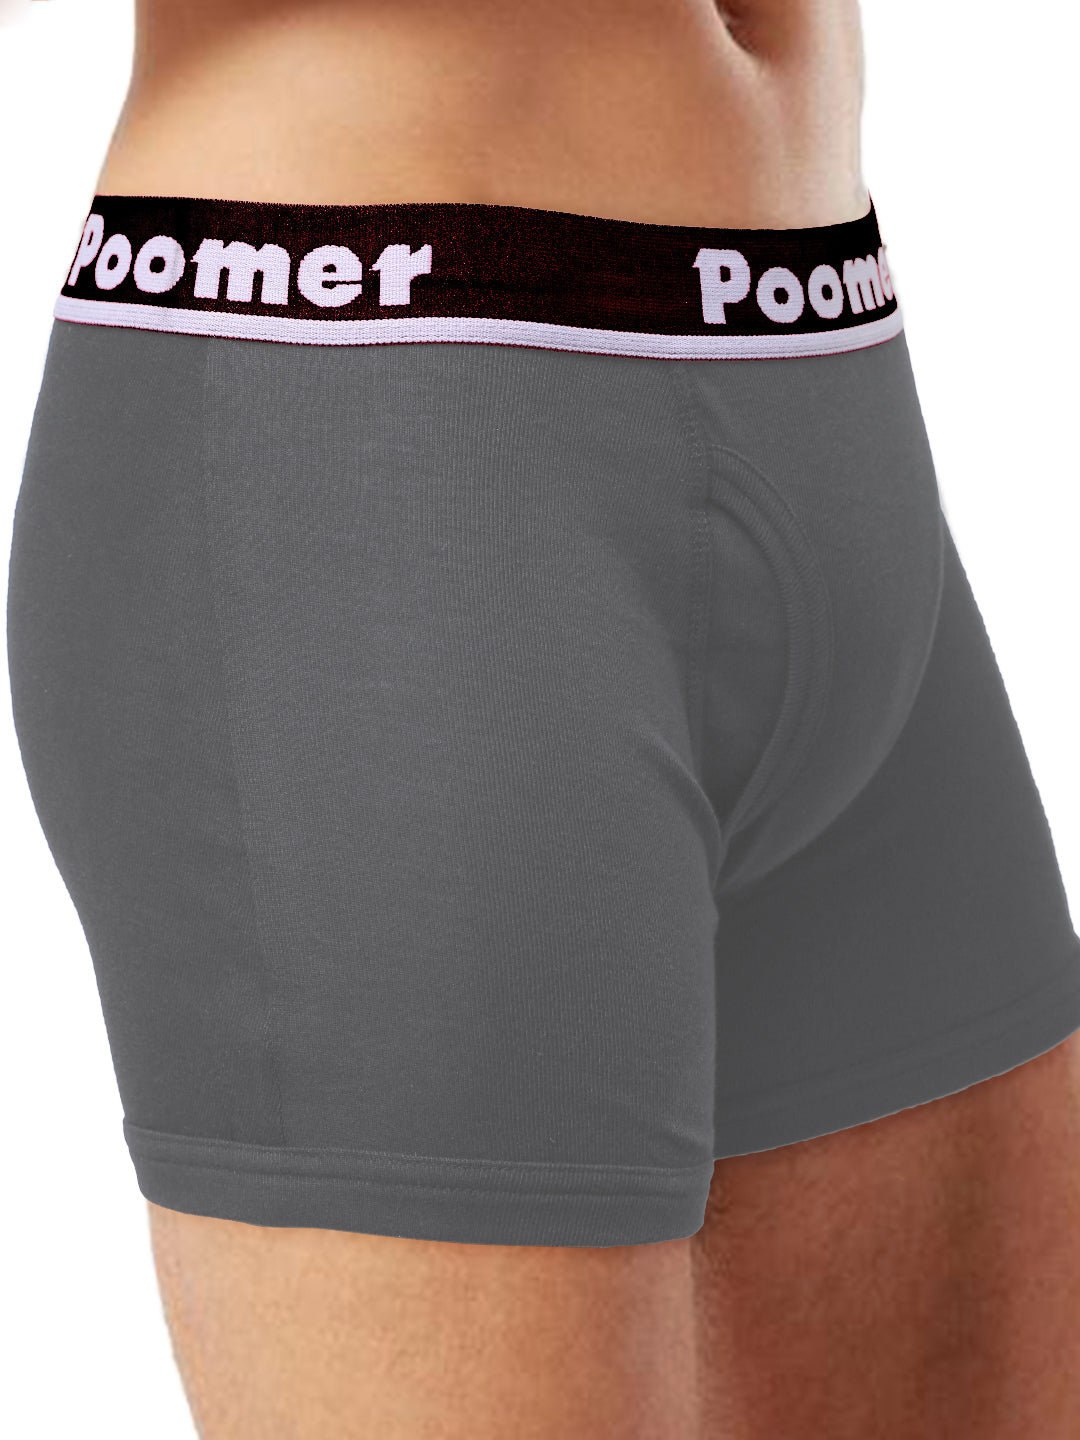 Poomer Club Man Trunks - Spanish Gray